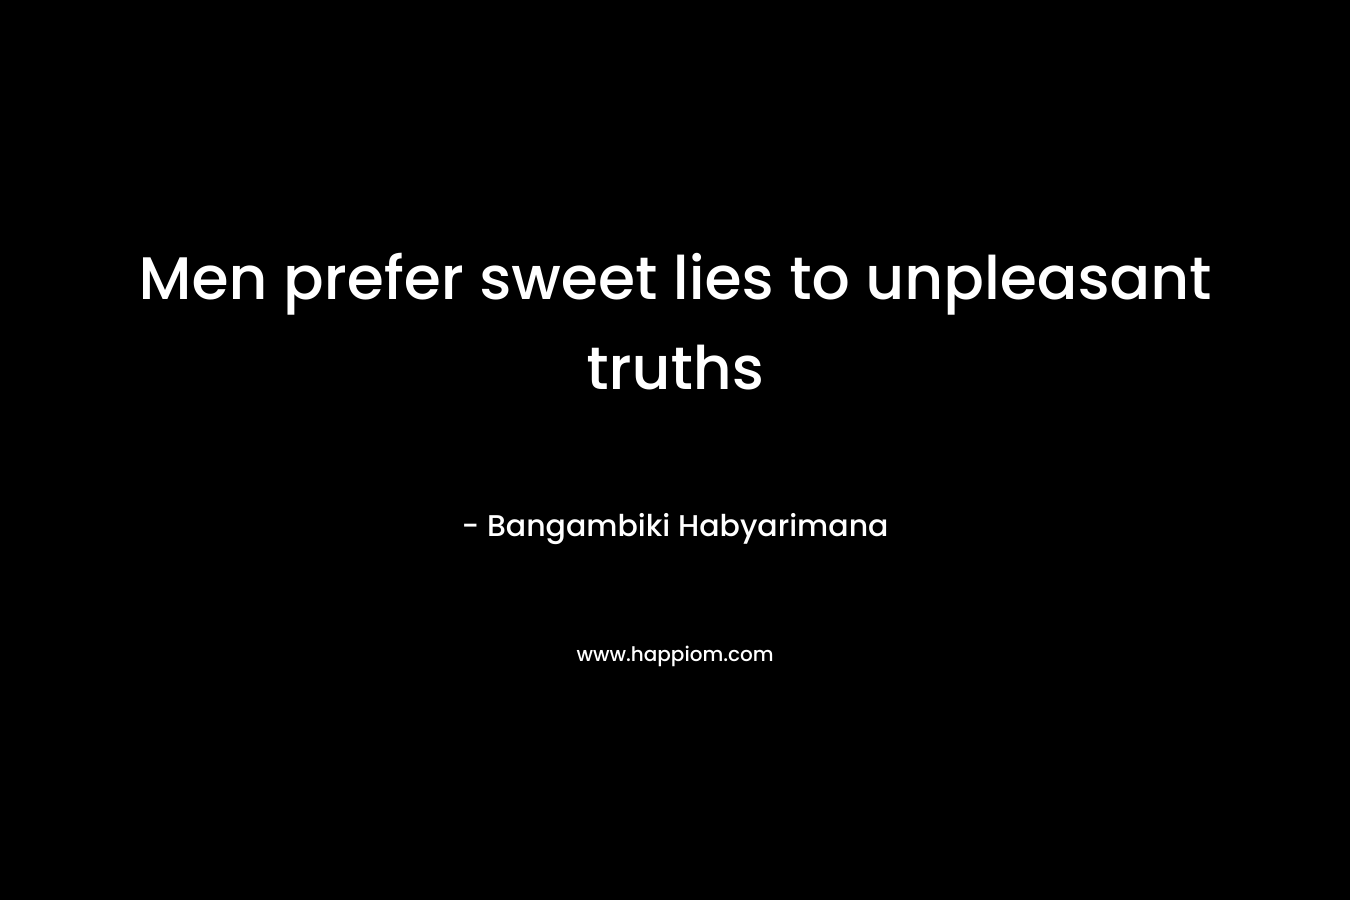 Men prefer sweet lies to unpleasant truths